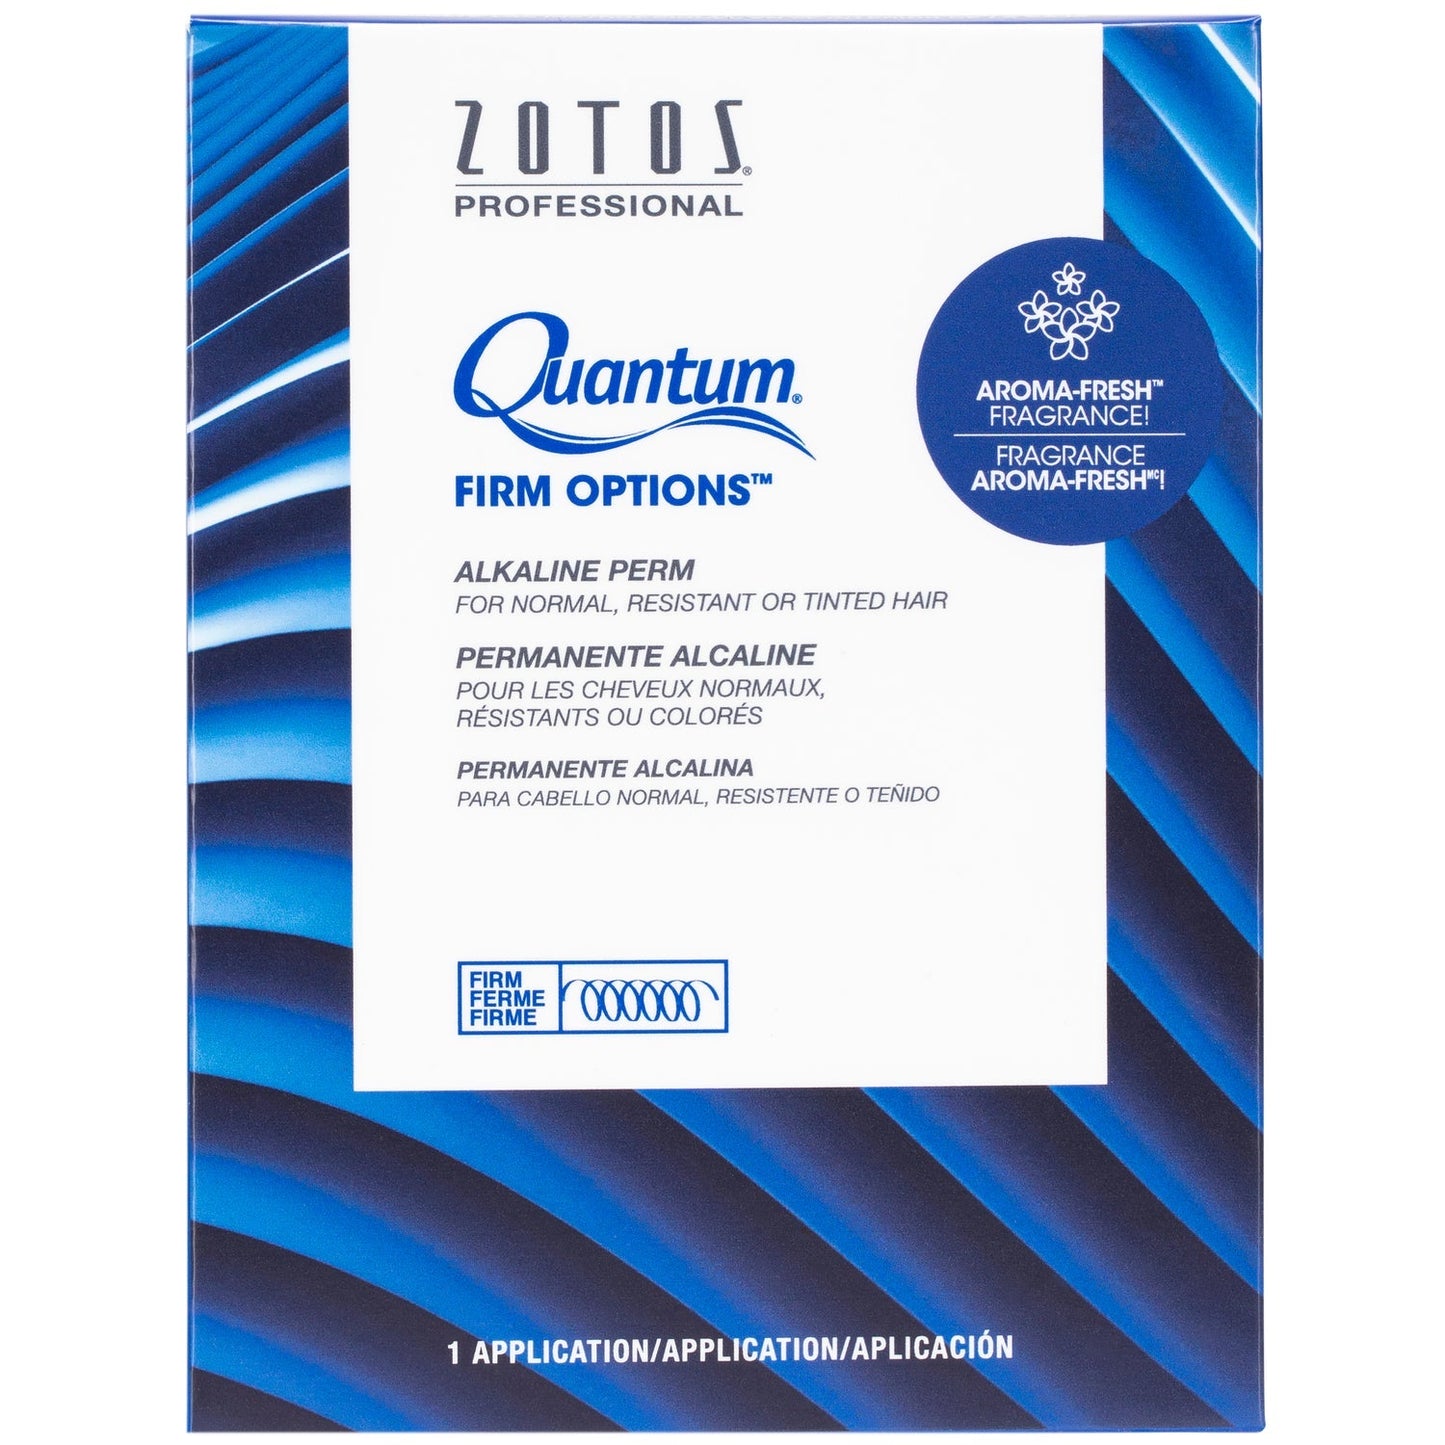 Zotos Quantum Firm Options Alkaline Perm